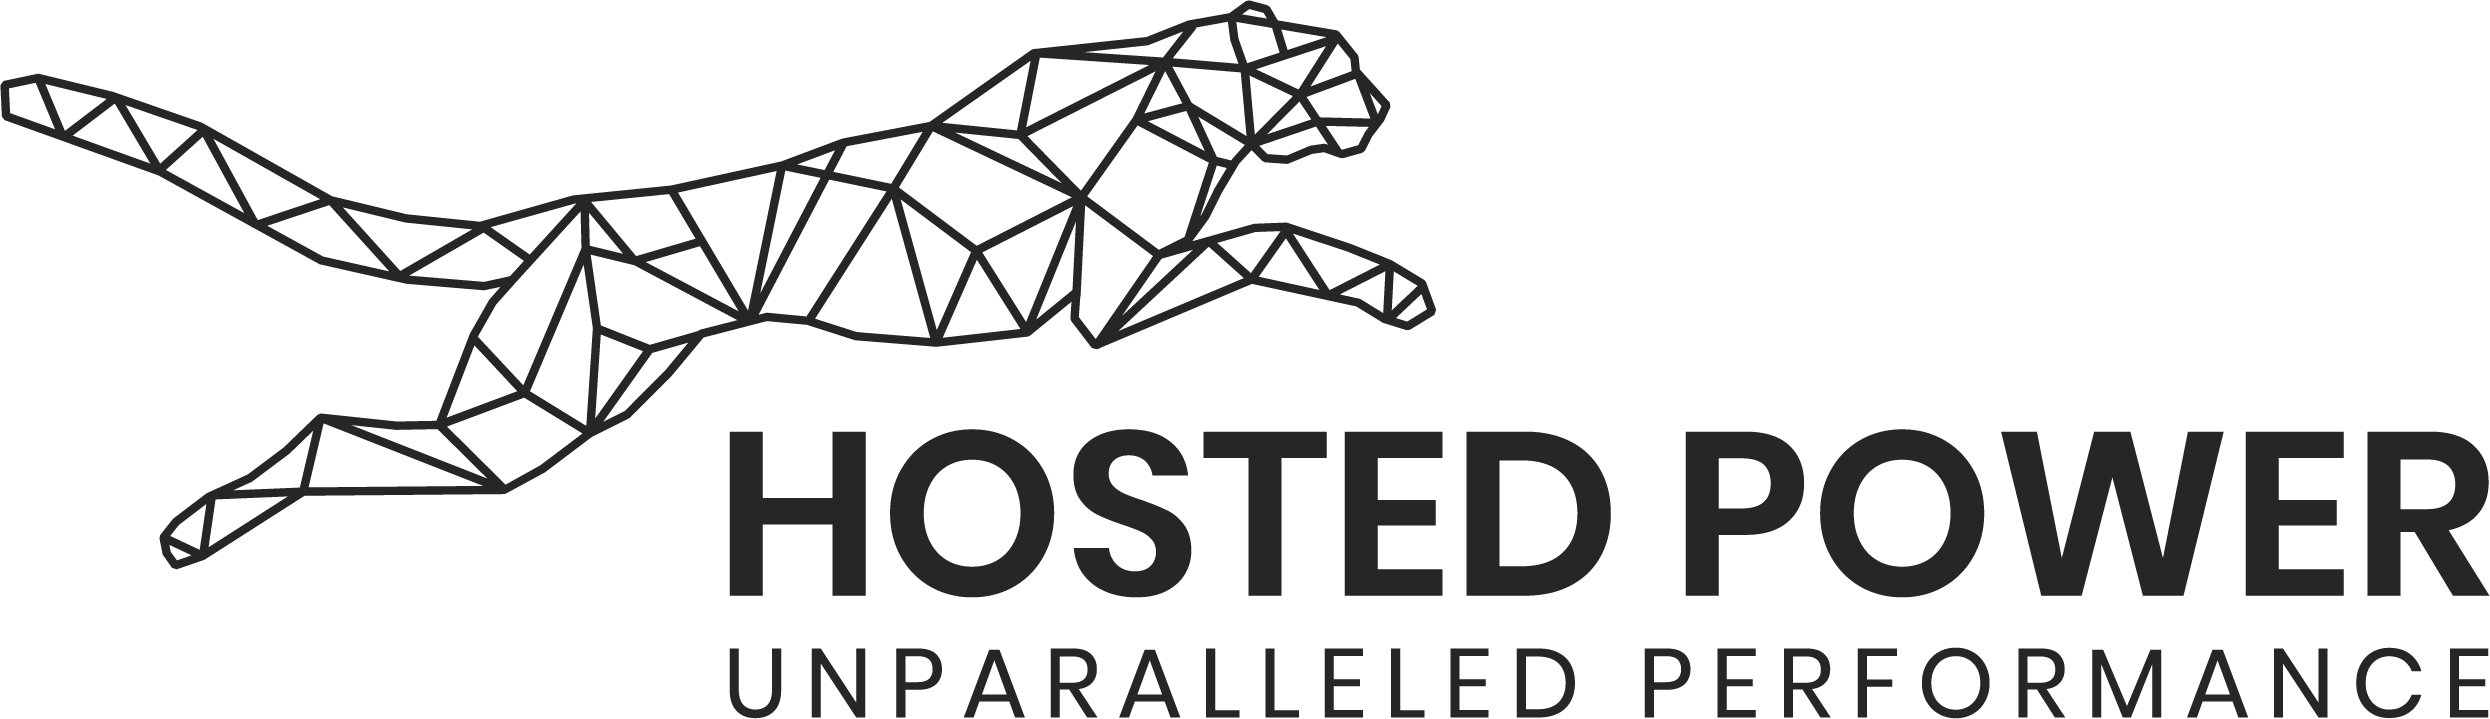 Hosted Power logo